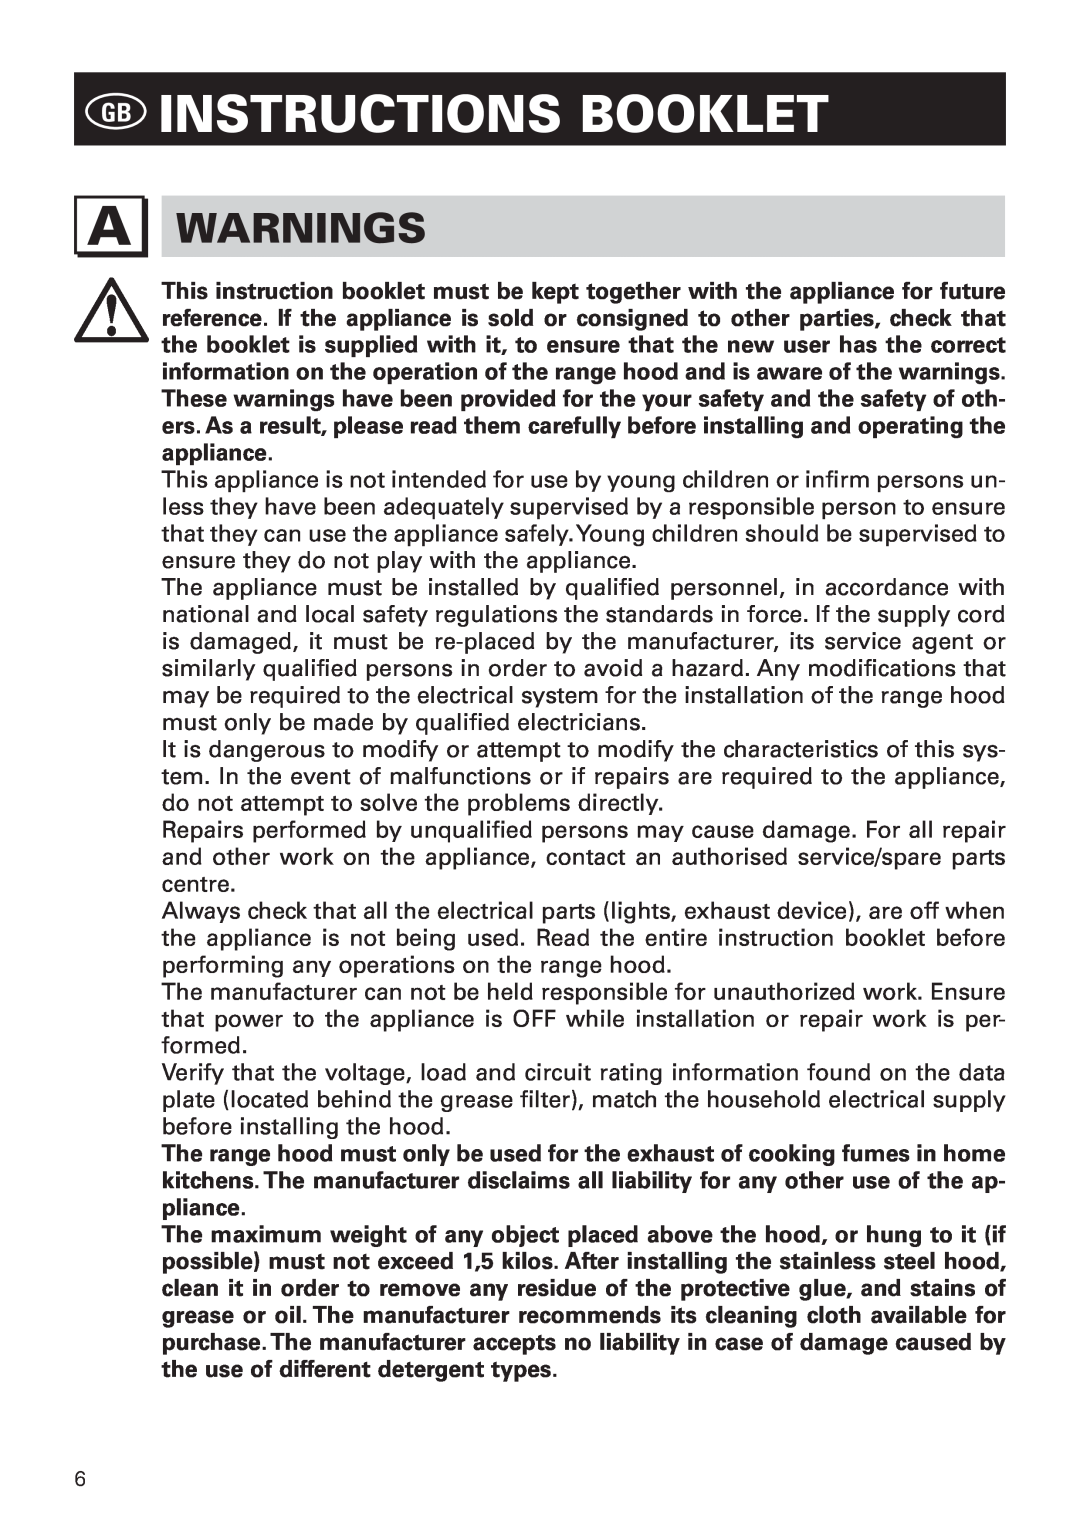 Bertazzoni KIN 36 PRO X manual Gb Instructions Booklet, Warnings 